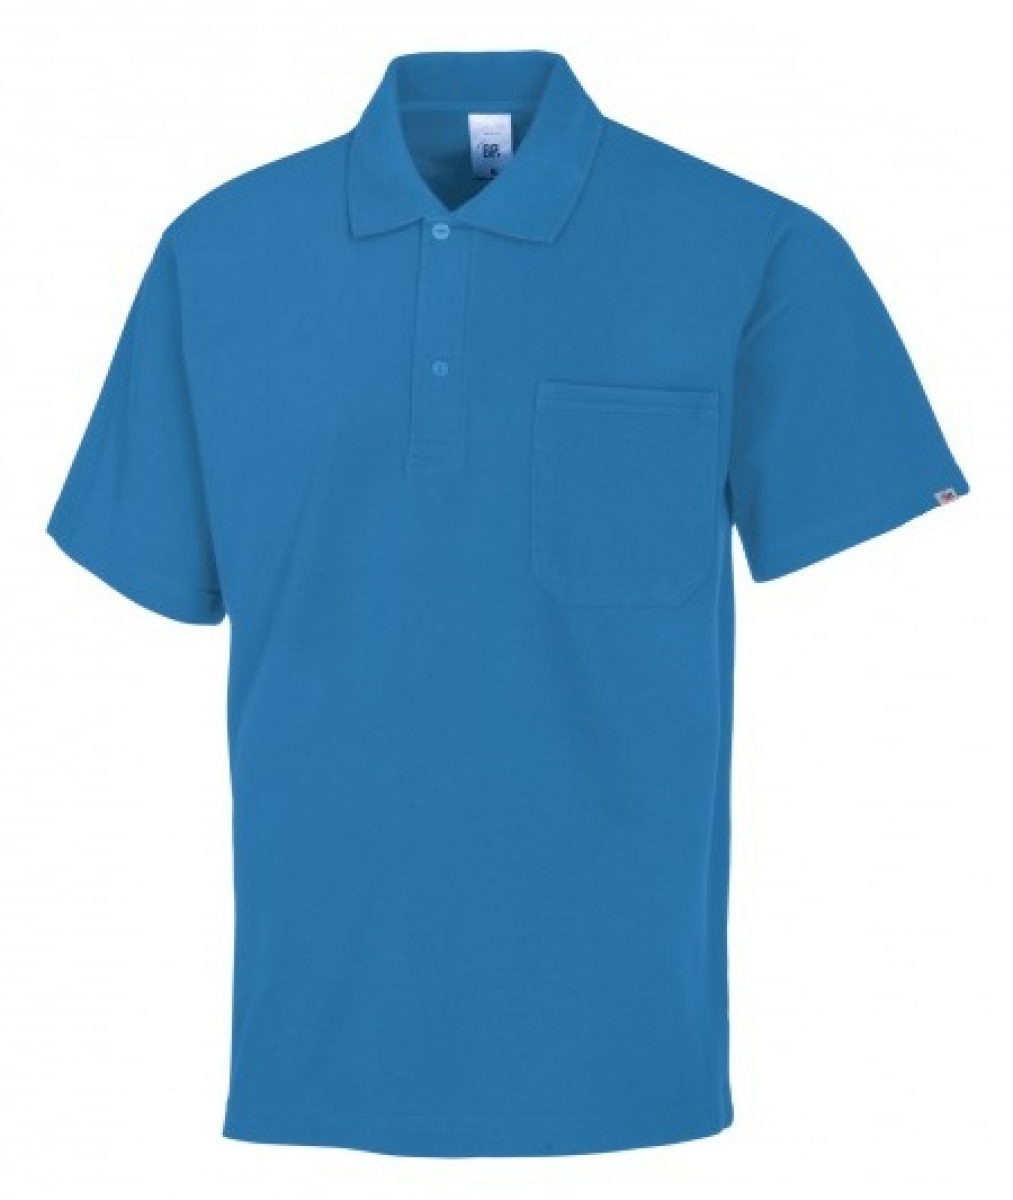 BP-Worker-Shirts, Poloshirt fr Sie & Ihn, ca. 220g/m, azurblau